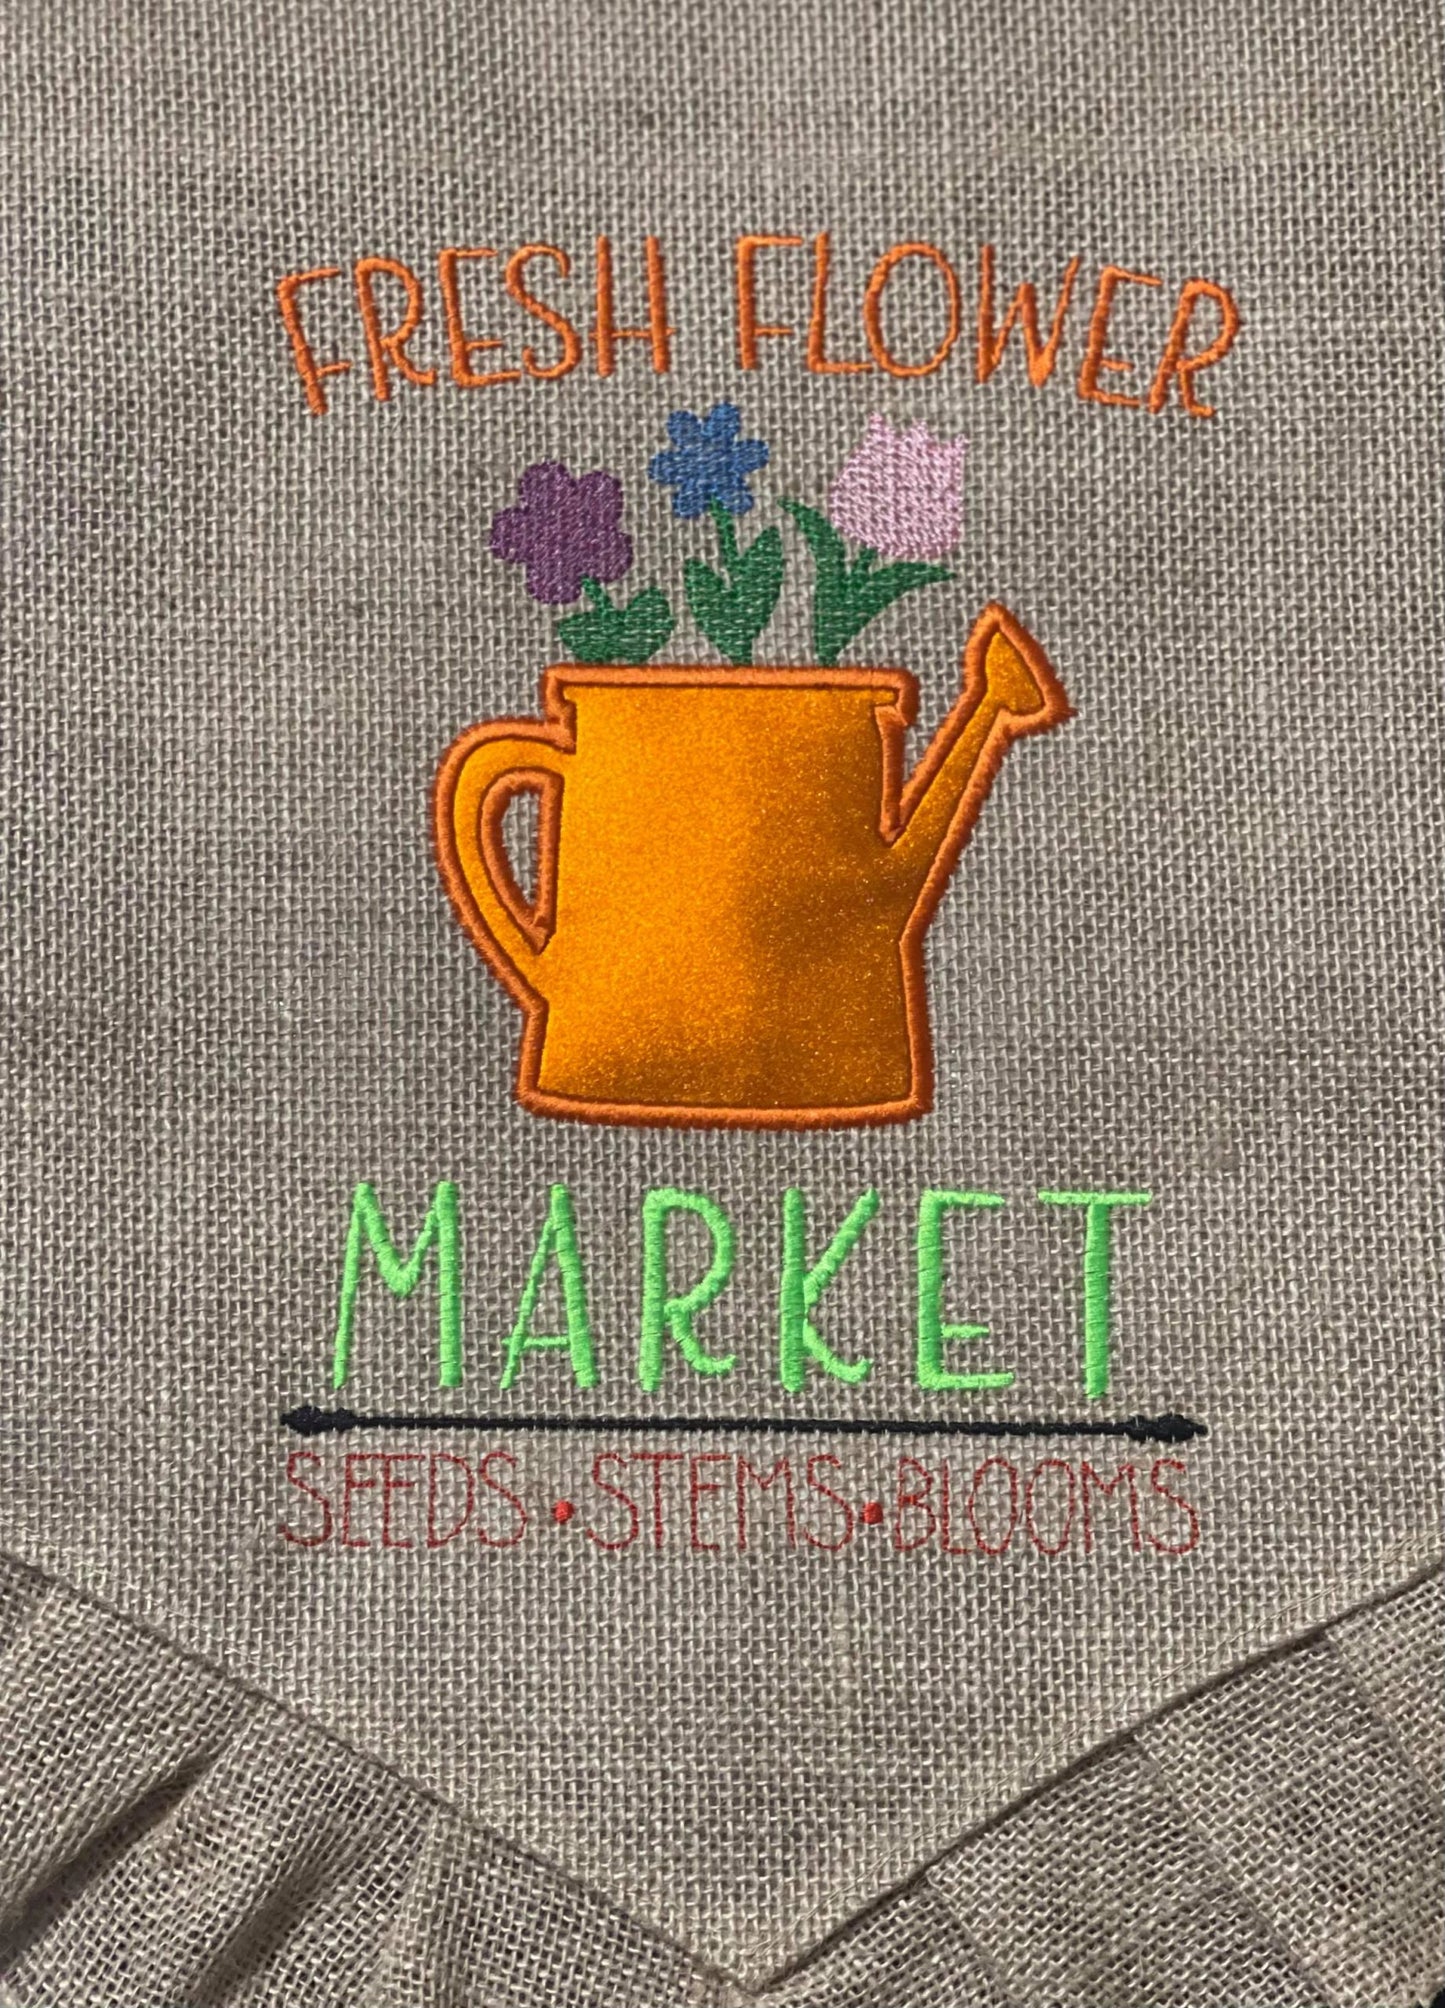 Fresh Flower Market - 3 sizes- Digital Embroidery Design